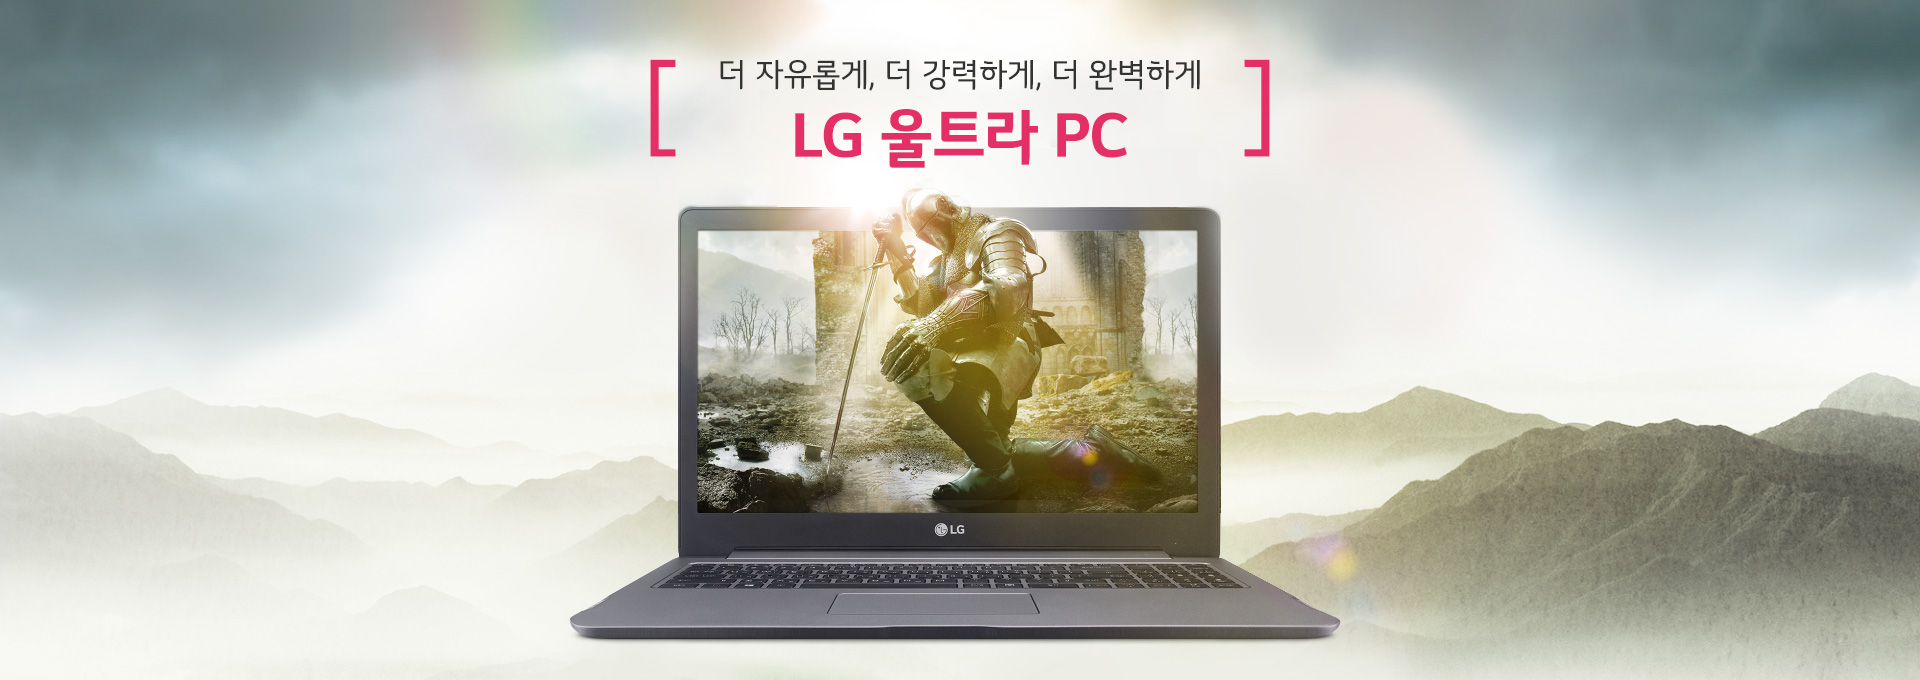 LG 울트라 PC